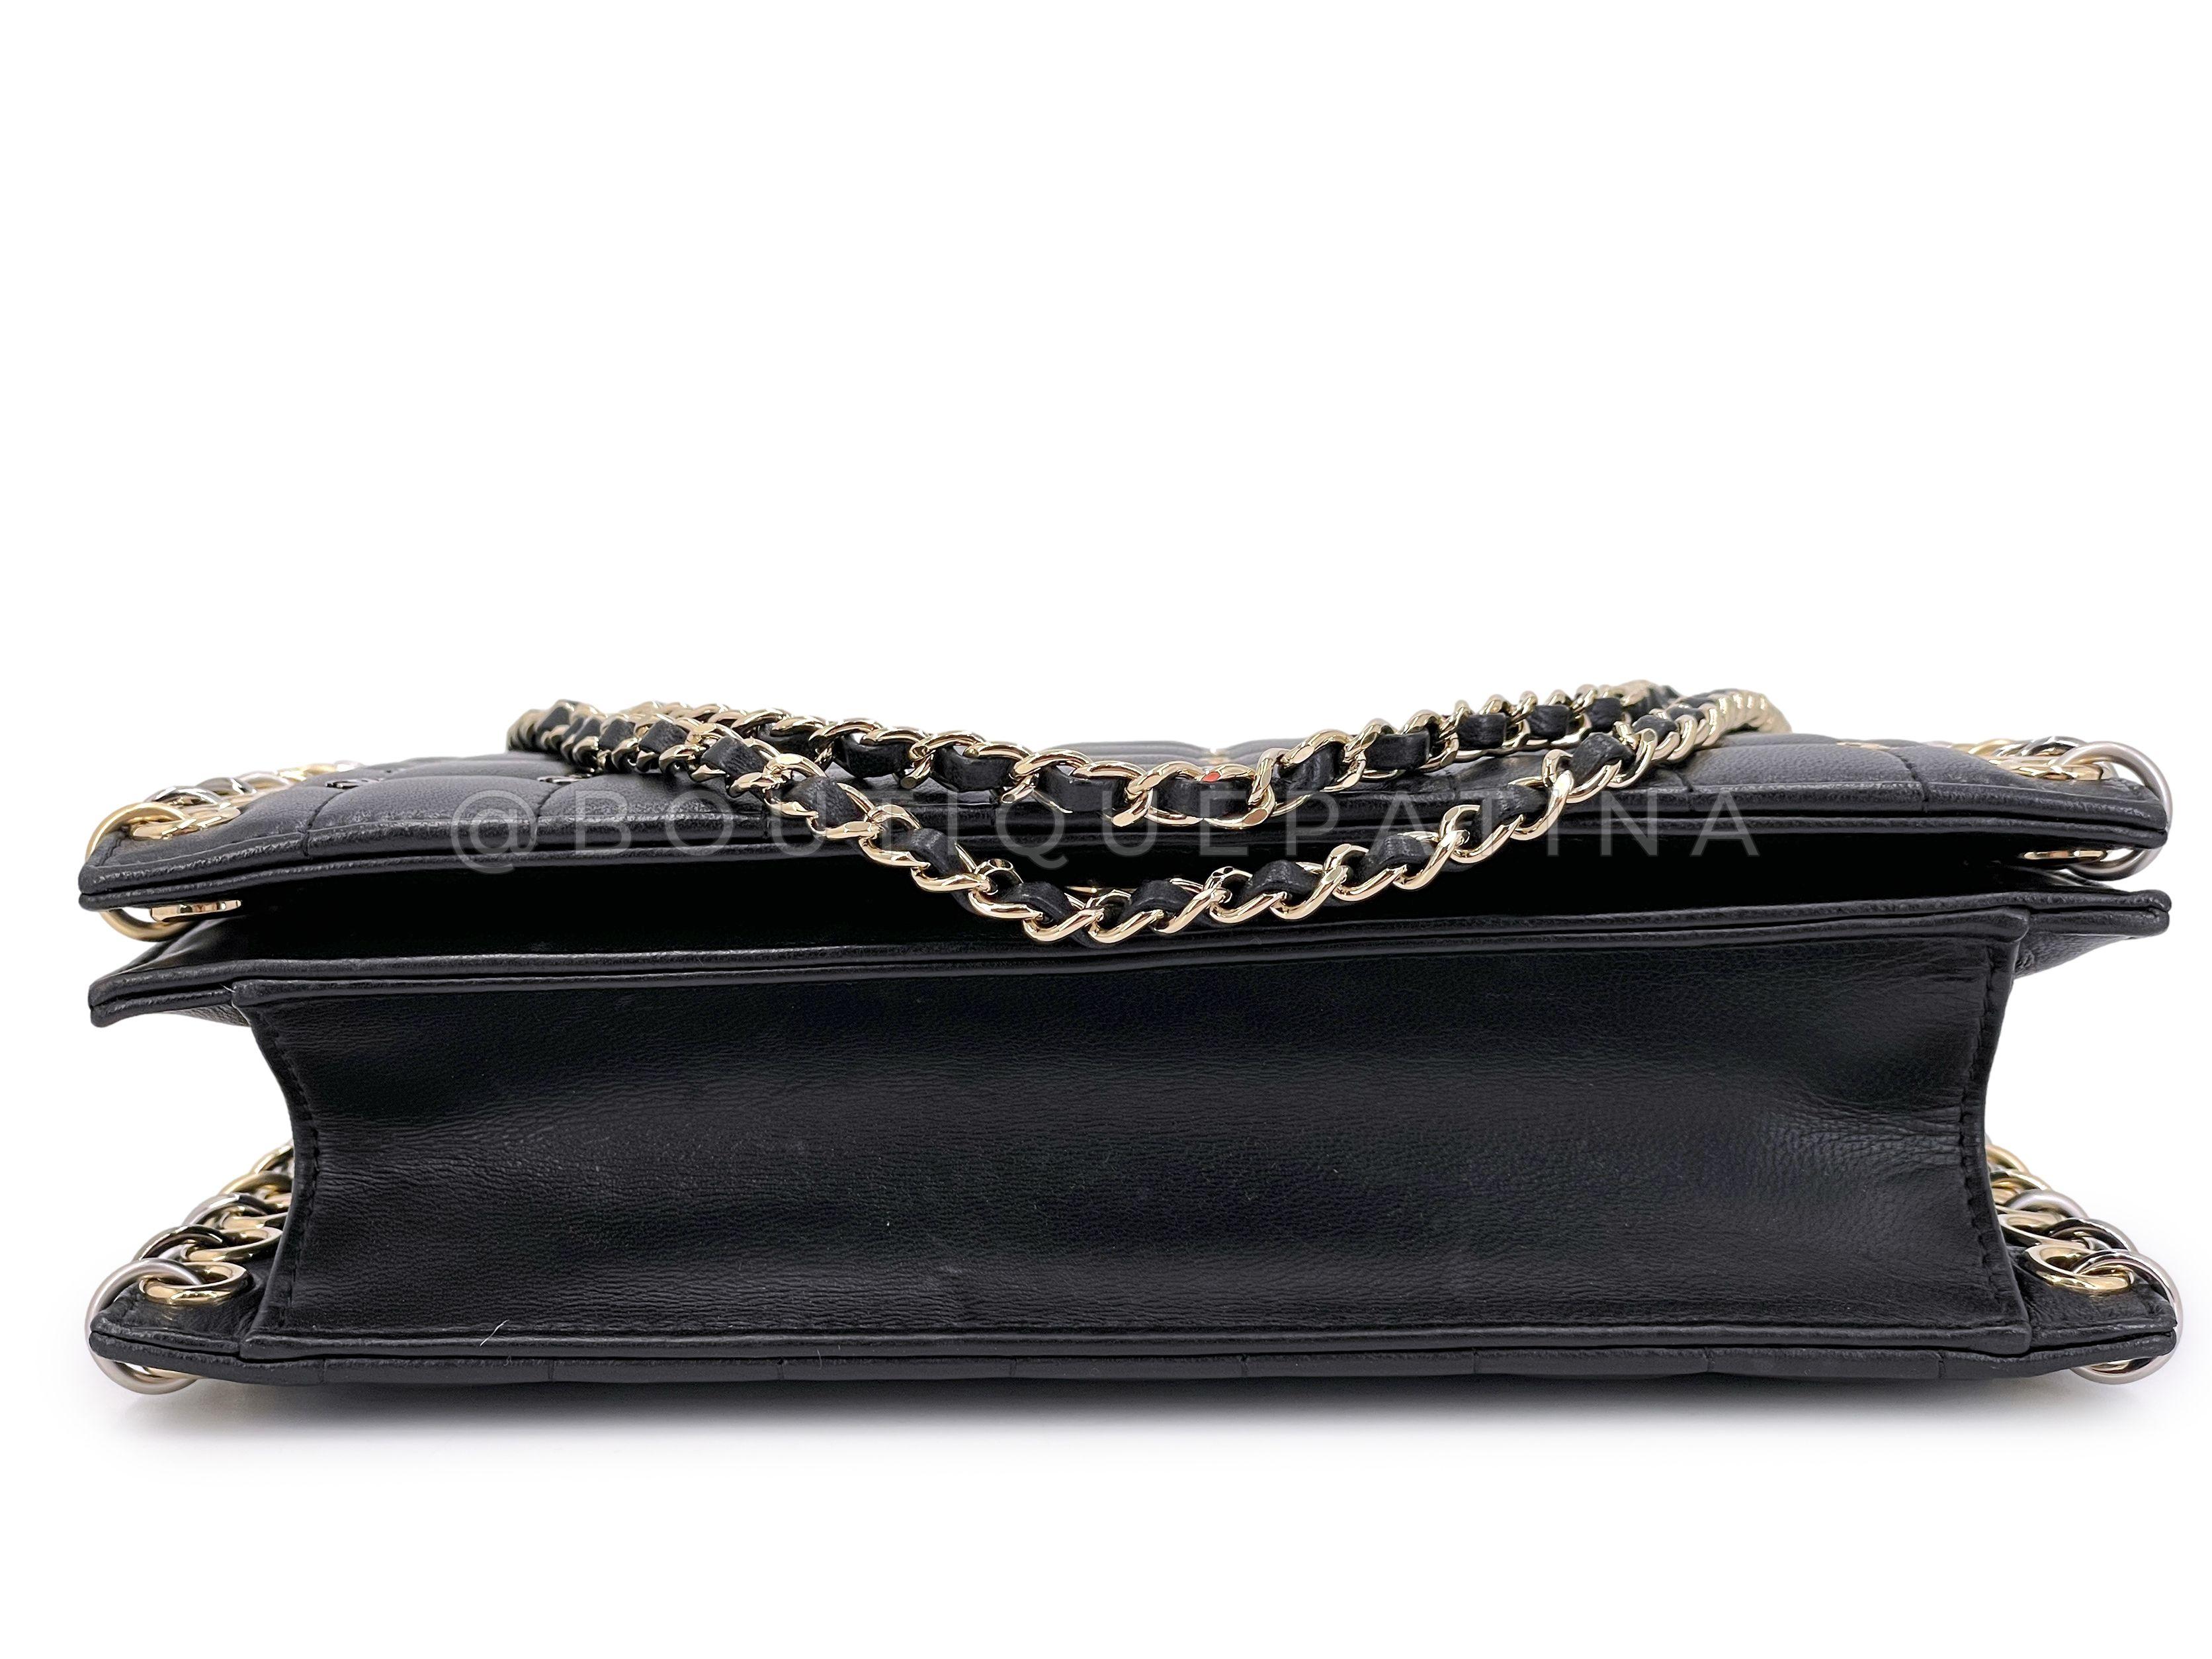 Pristine Chanel 16B Punk CC-Studded Piercing Clutch on Chain Bag Black 67544 For Sale 2